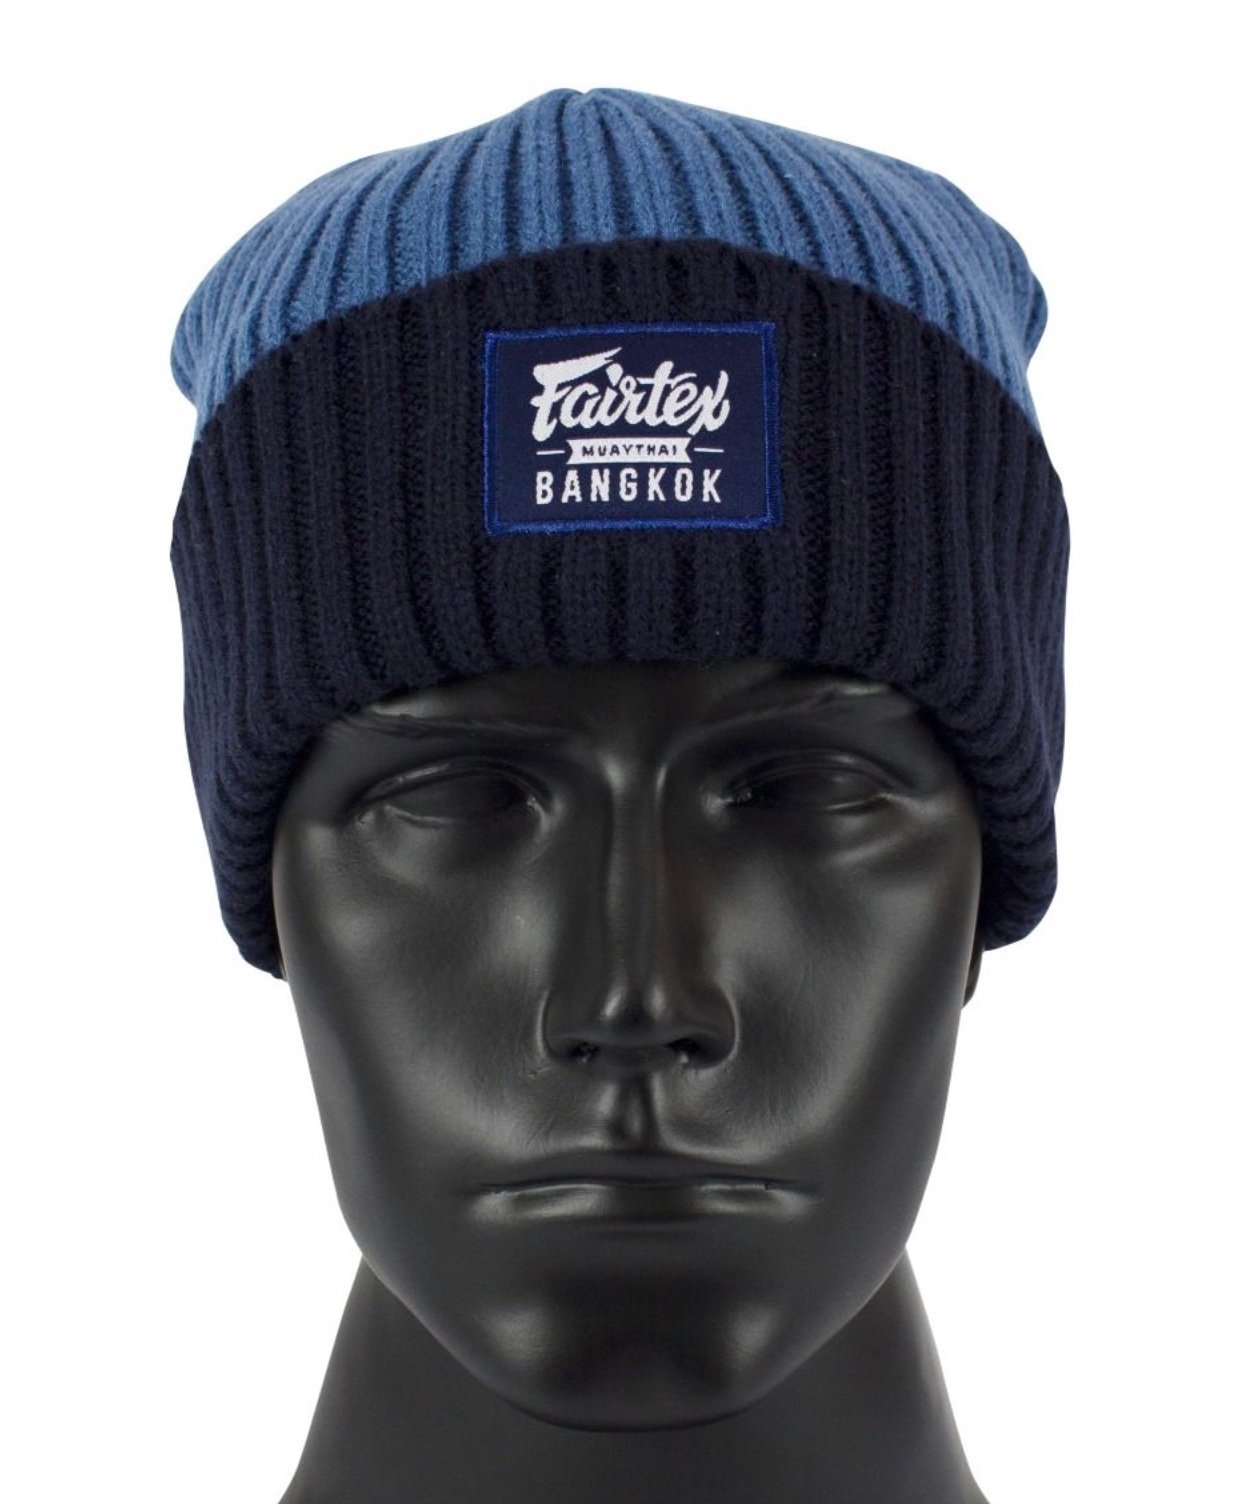 Fairtex Beanie Winter Hat - BN7 - Blue - Nylon Bag Packaging Included - image 4 of 6